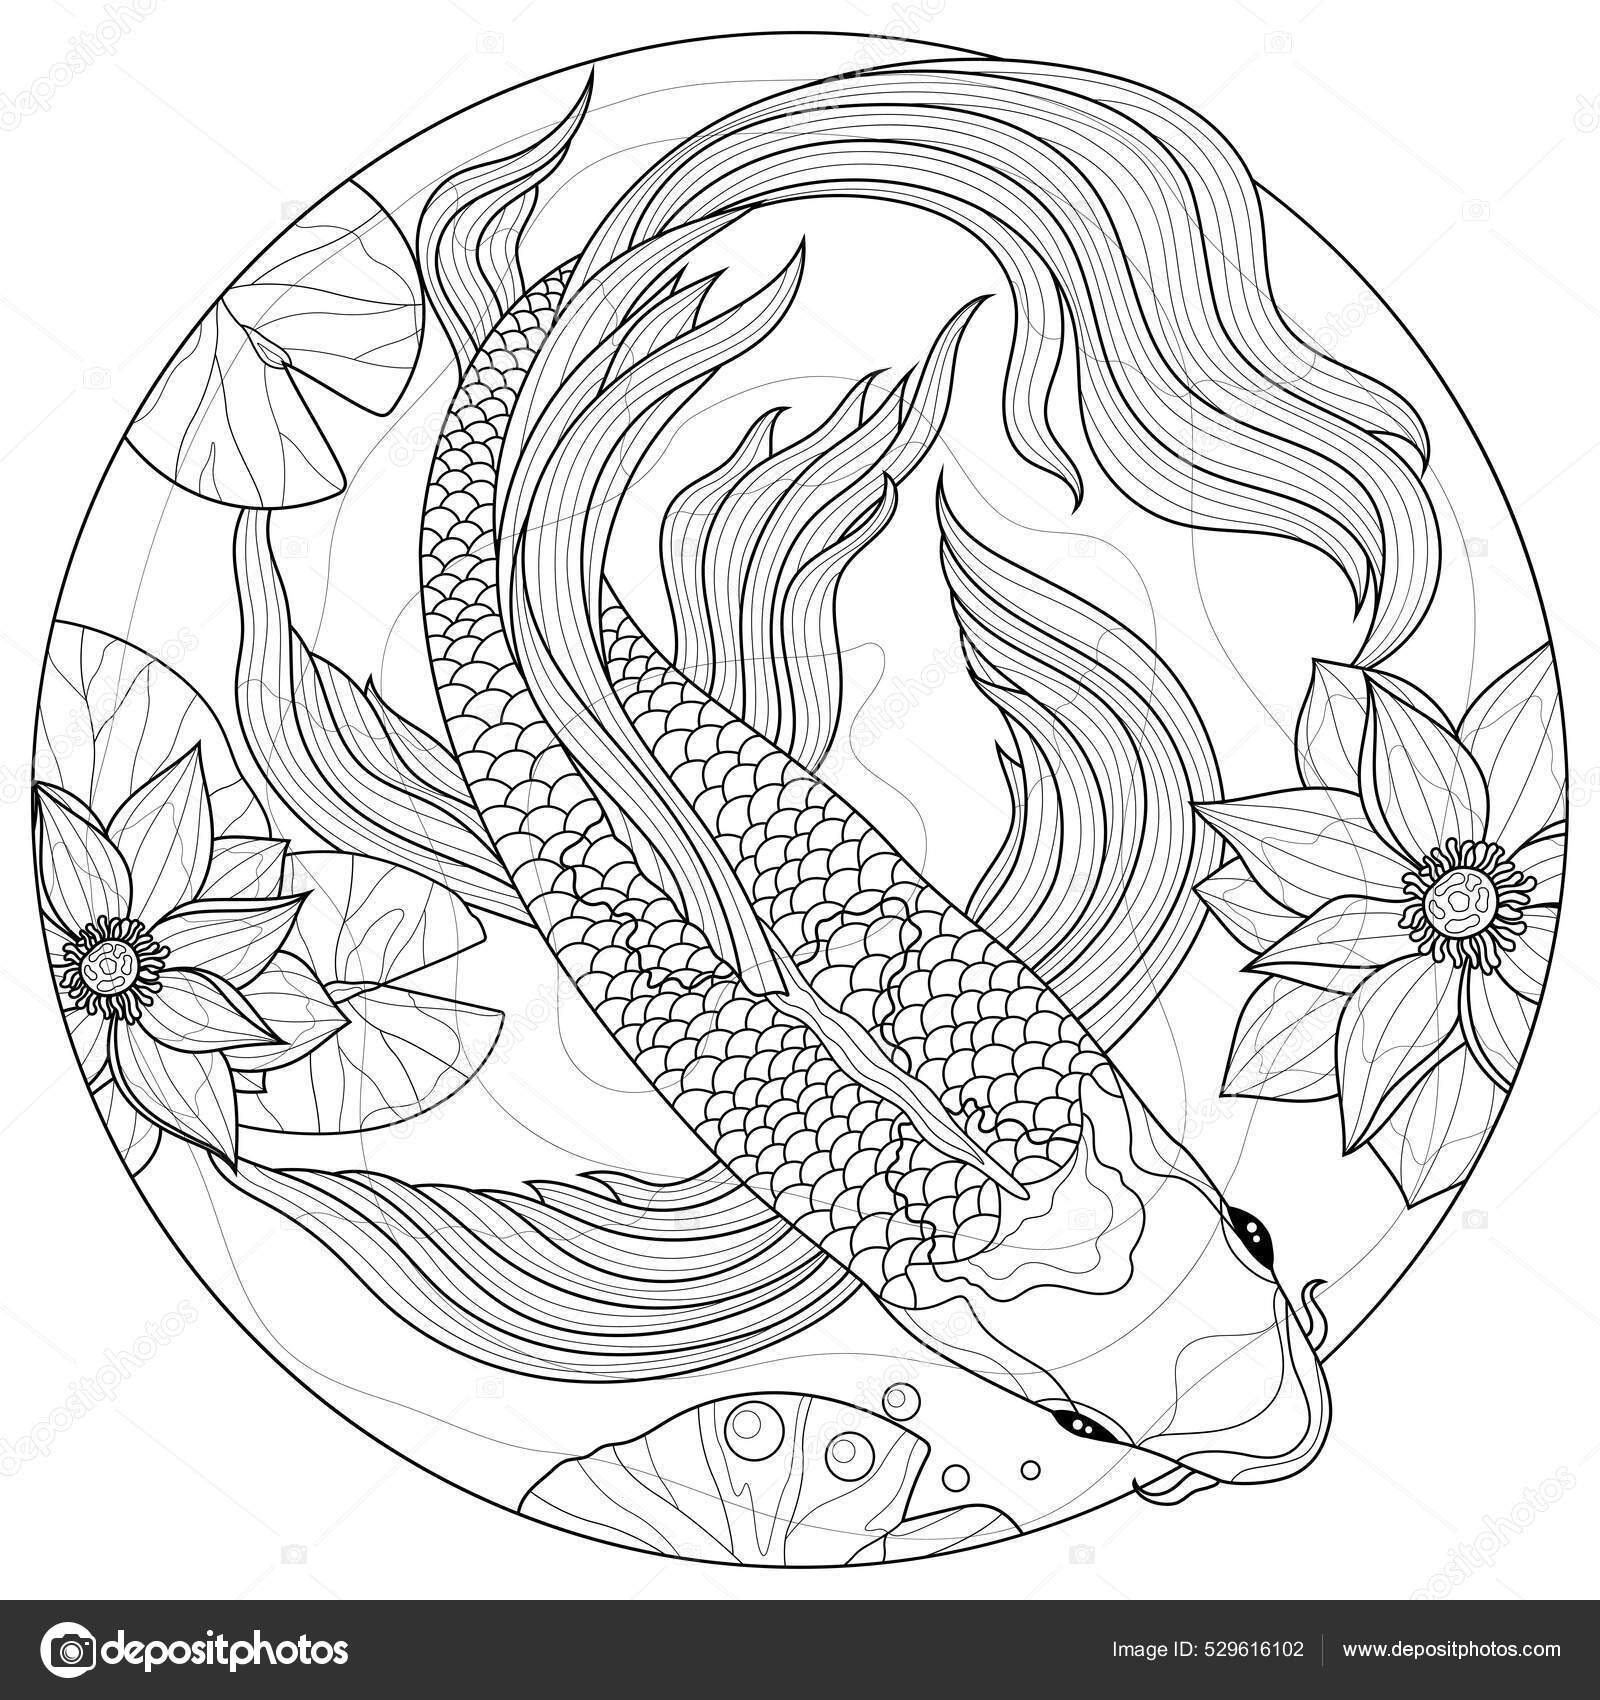 Koi carp fish lotuses coloring book antistress children adults zen stock vector by vlasenkoekaterinkagmail